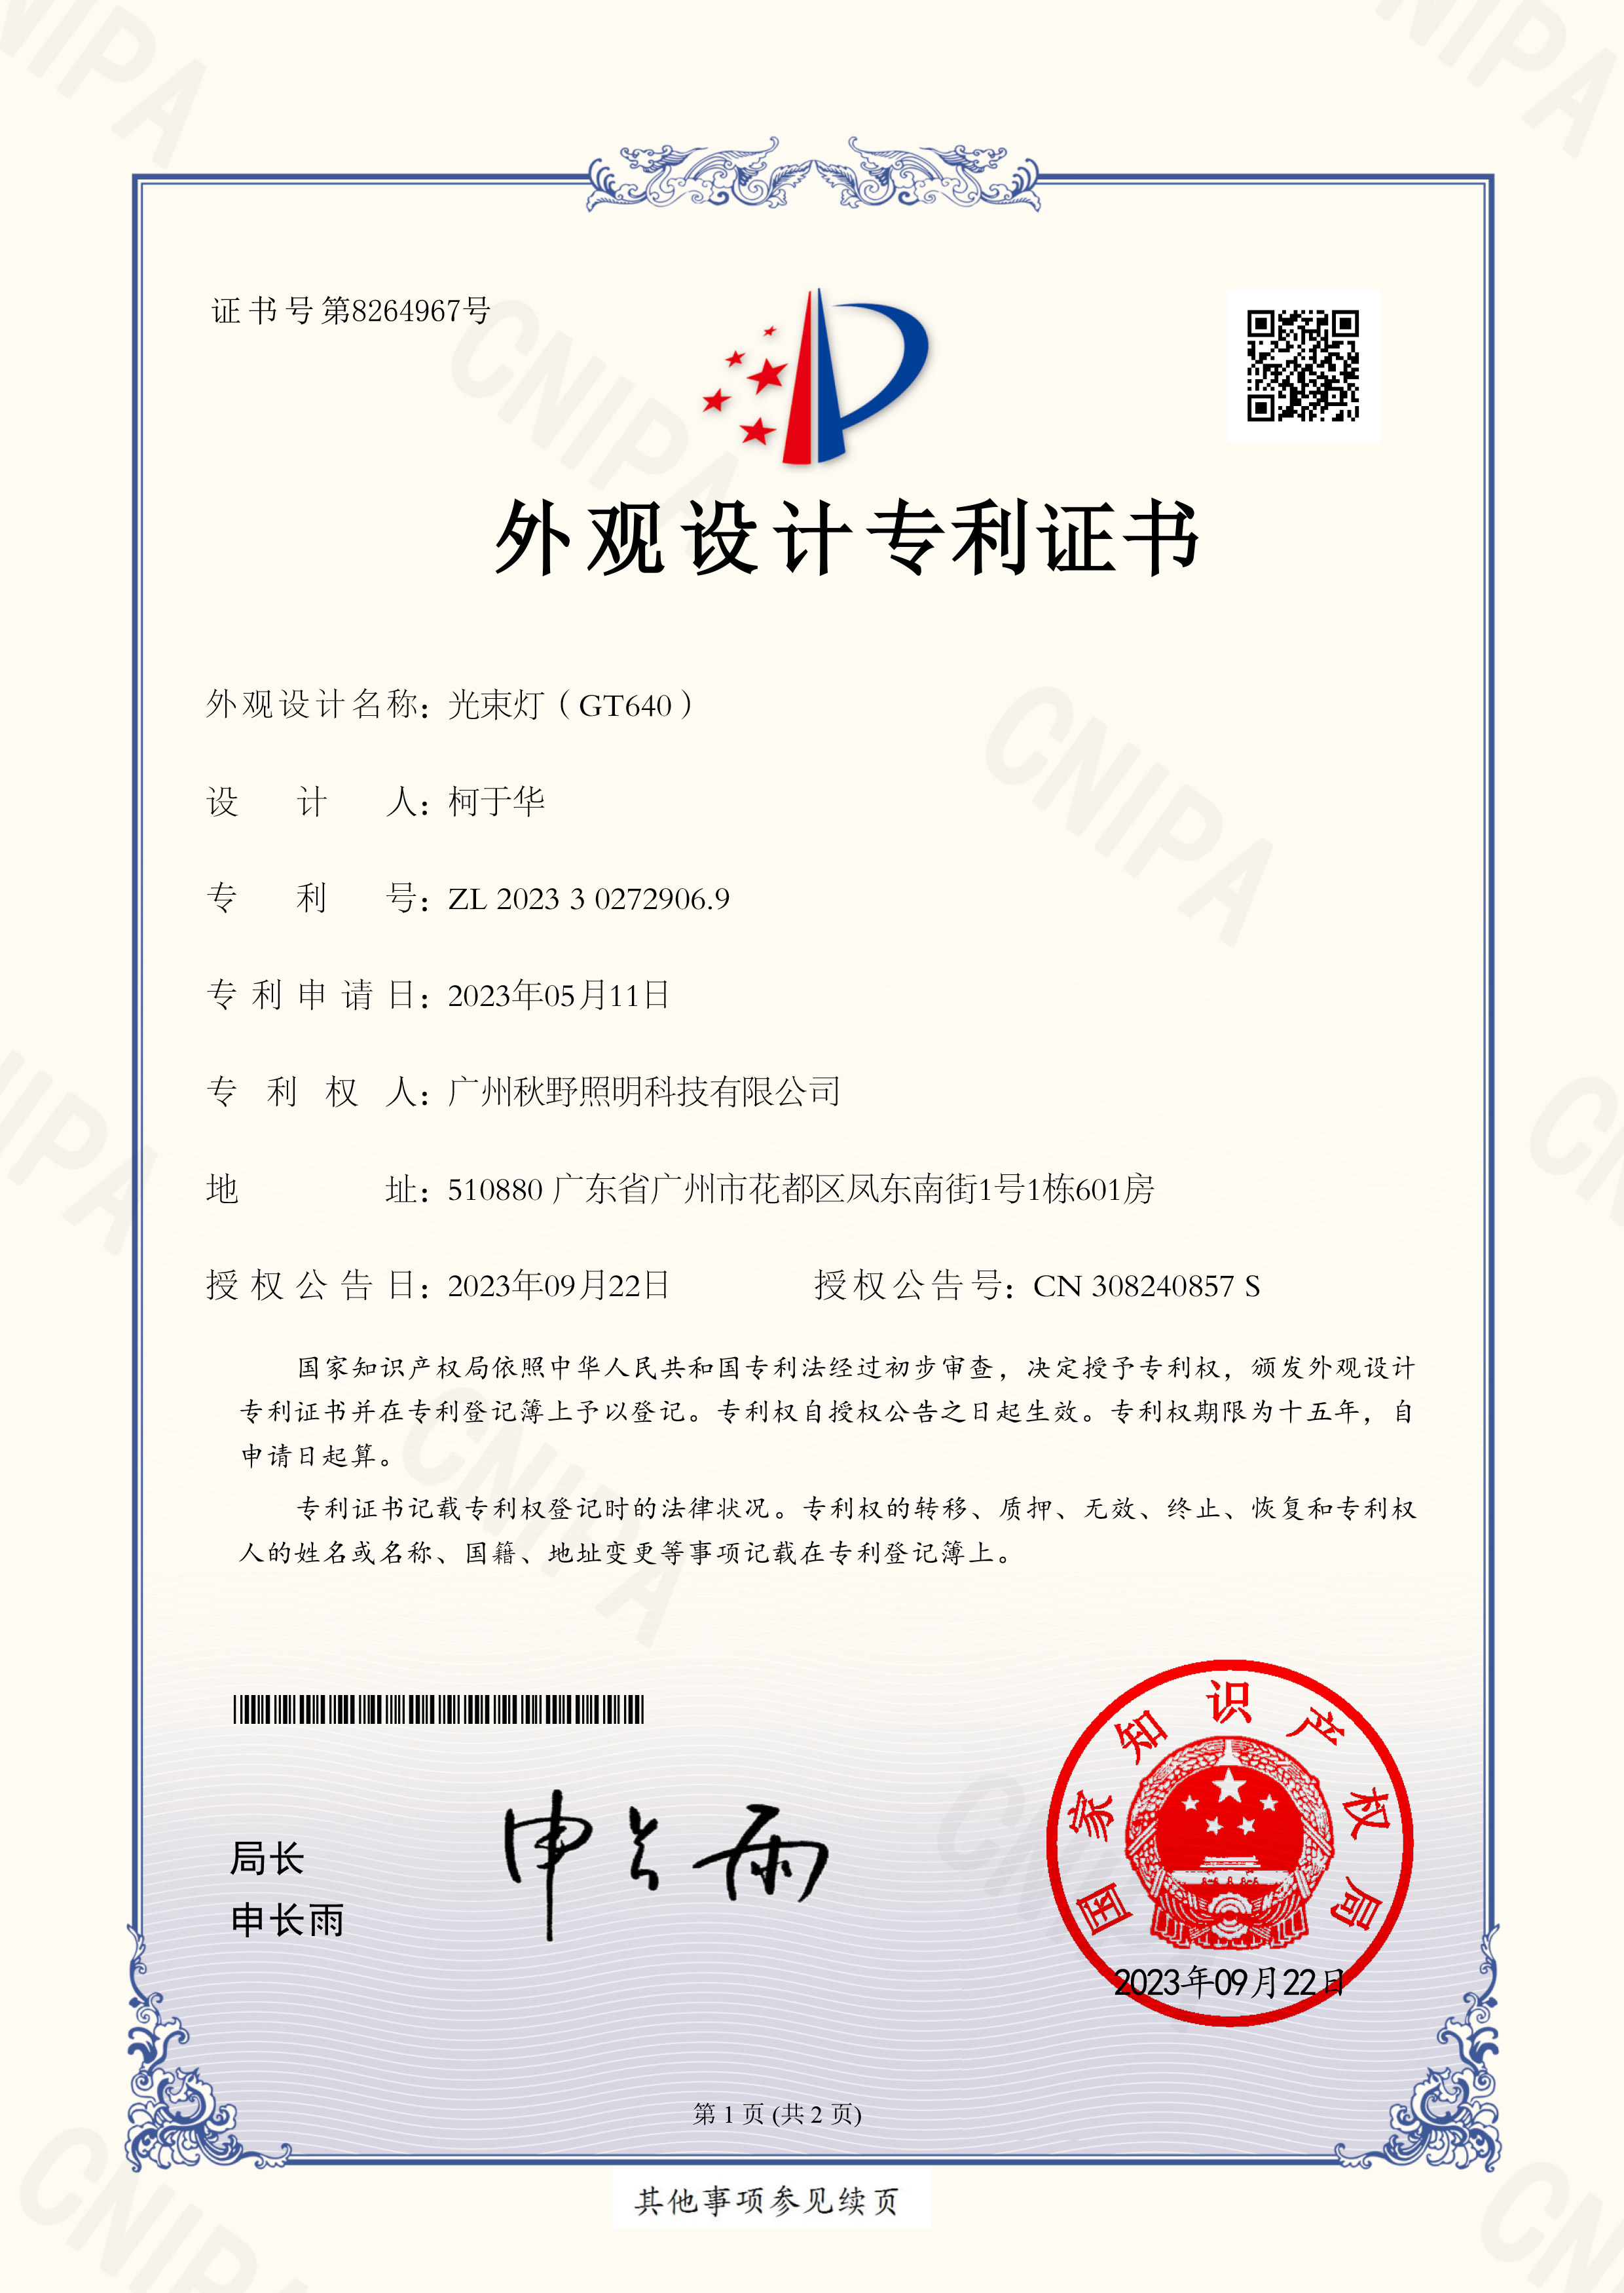 GT640-Design-Patent-Certificate-1